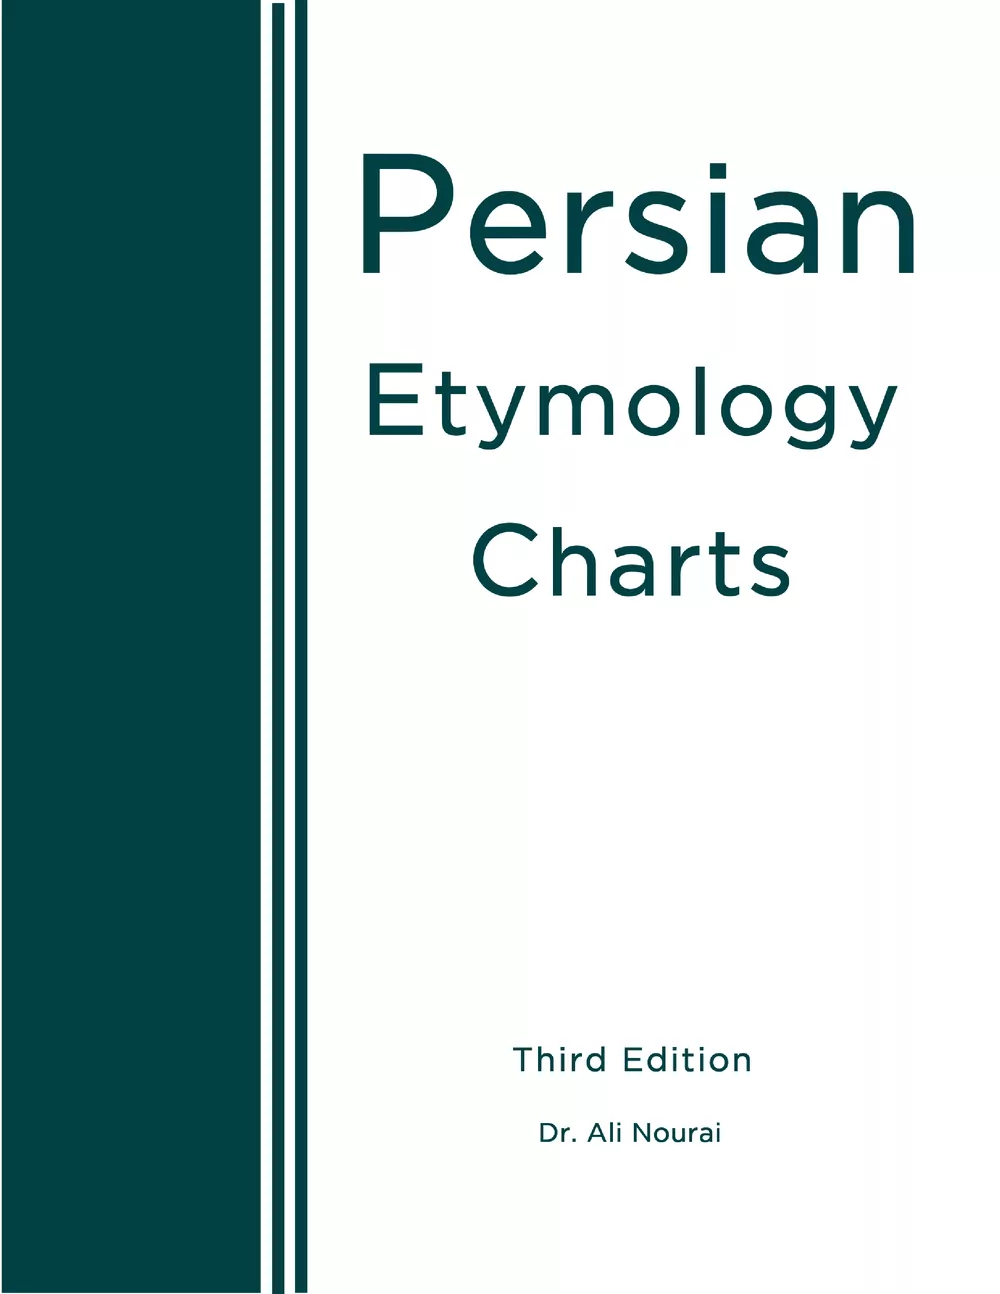 Persian Etymology Charts